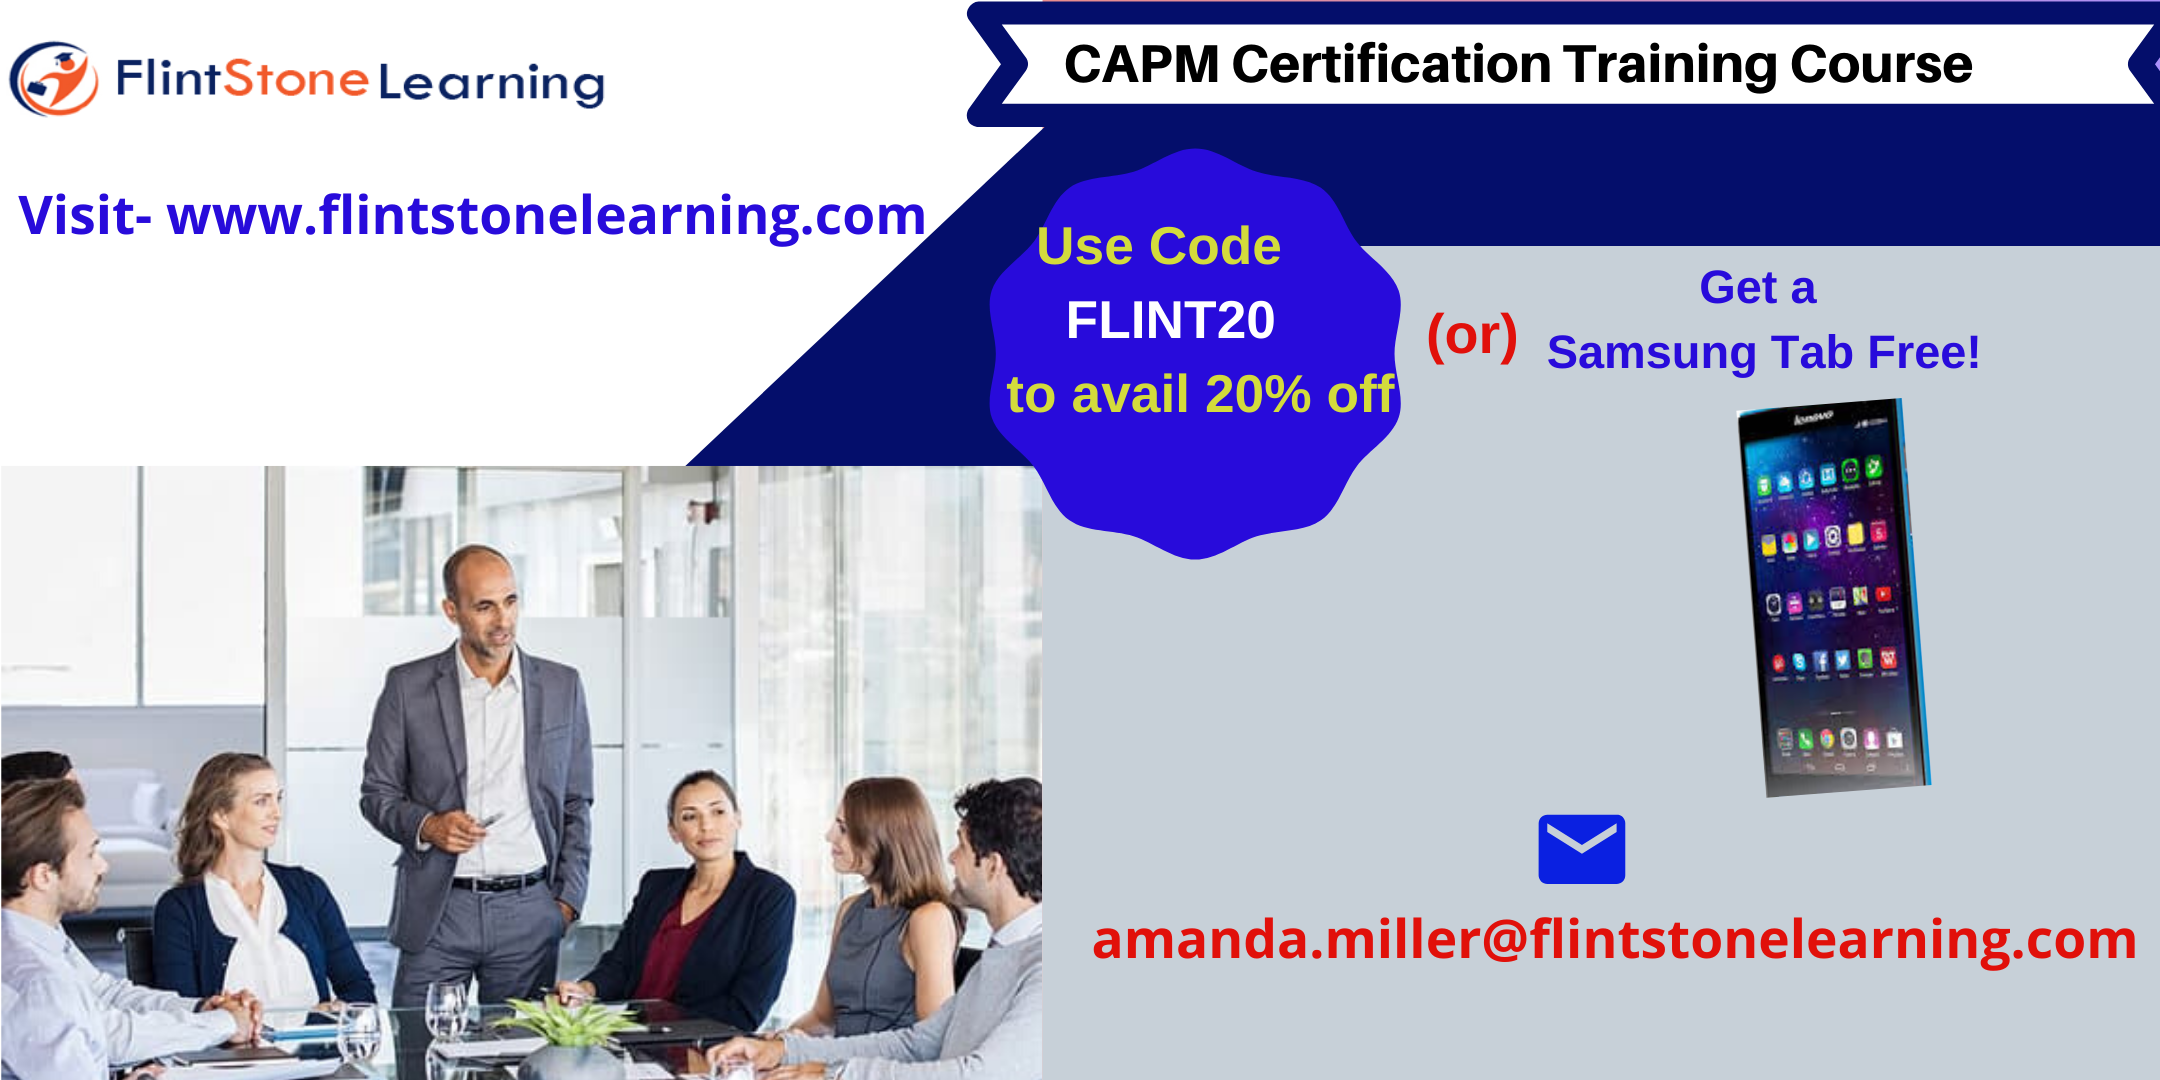 CAPM Certification Training Course in Lancaster, CA